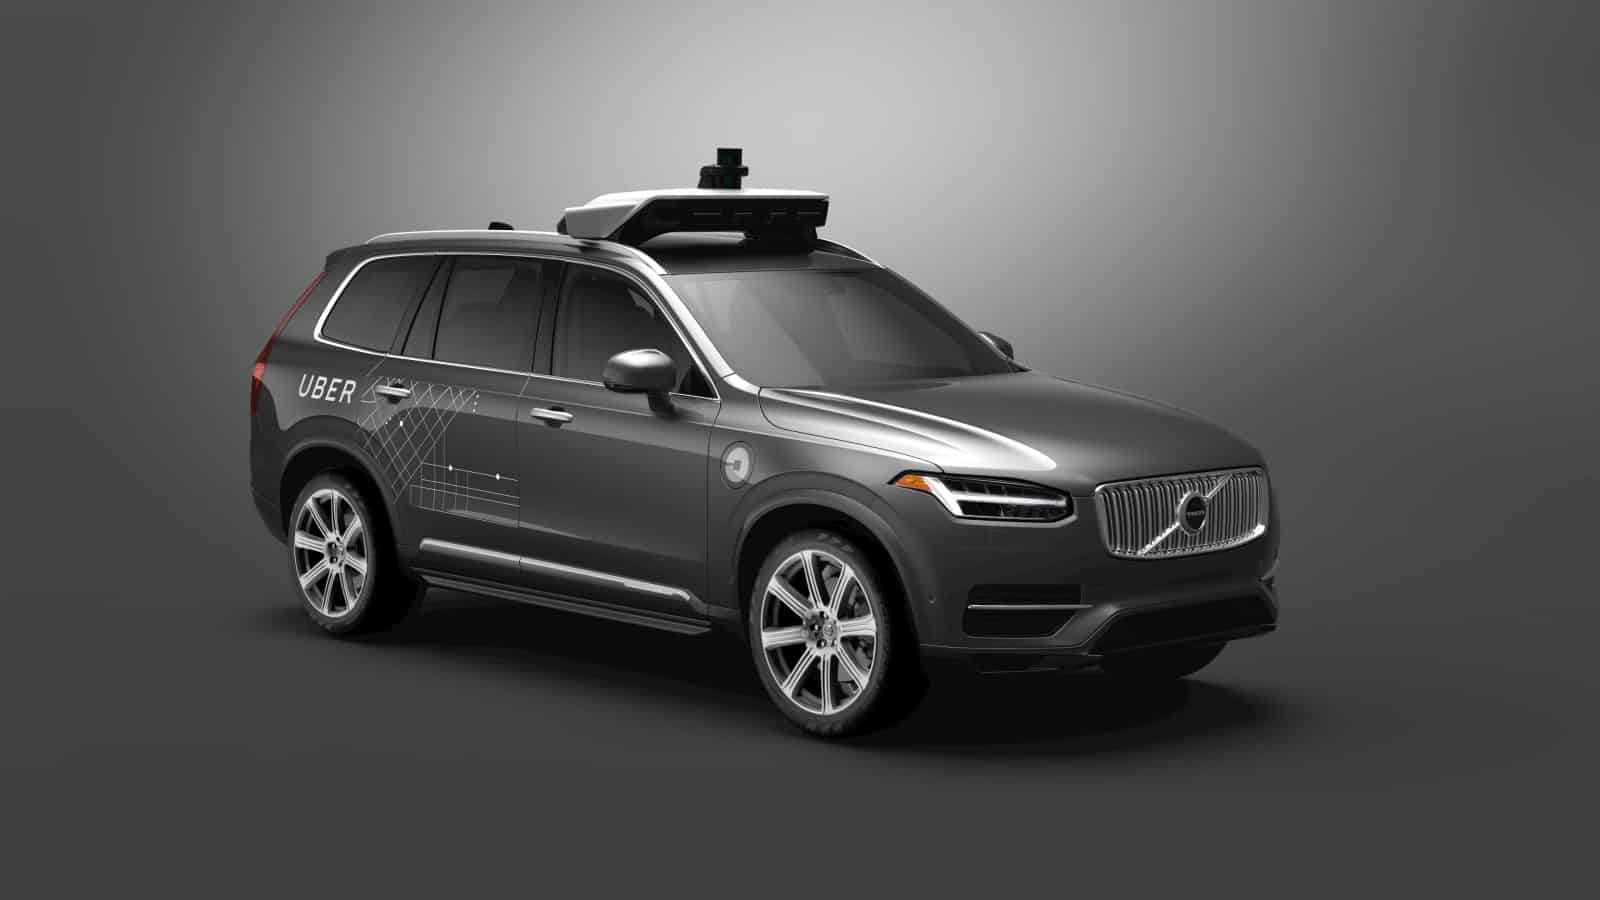 Uber-Volvo-self-driving-car